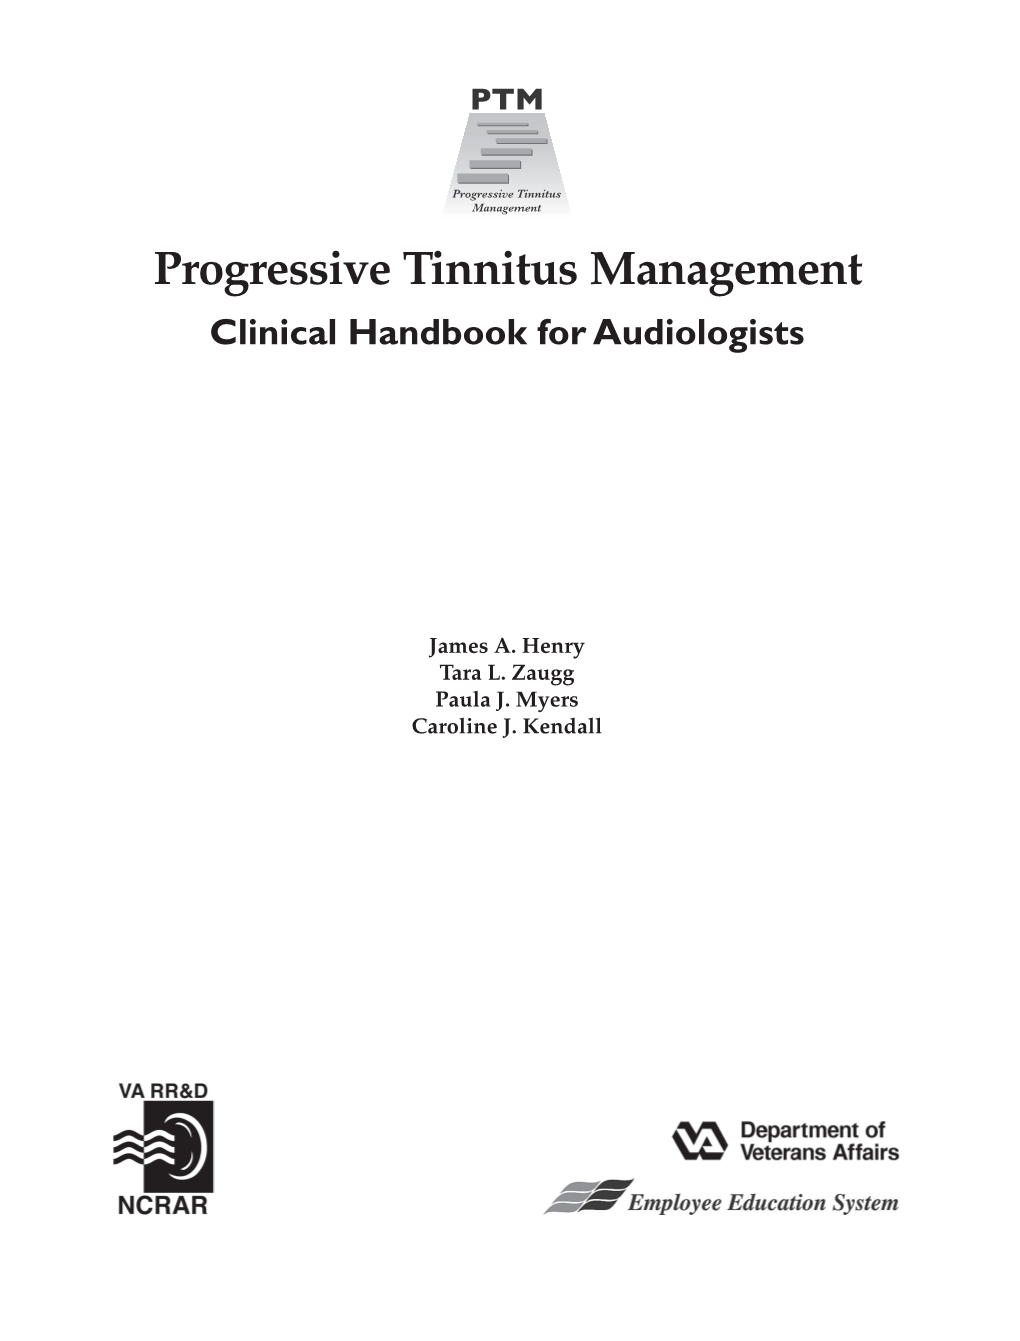 PTM Progressive Tinnitus Management Clinical Handbook for Audiologists